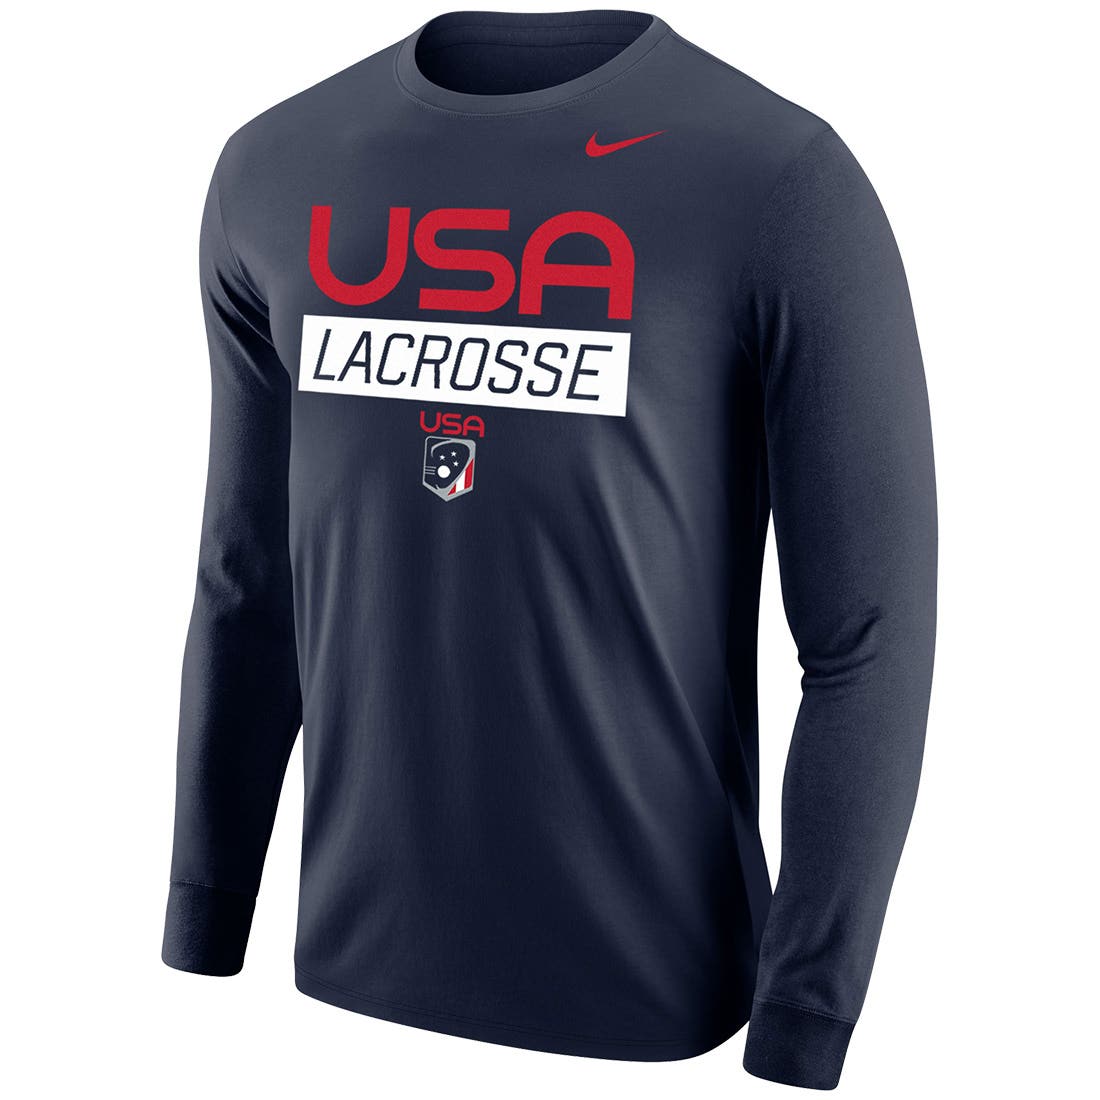 Nike Lacrosse USA Navy Long Sleeve - Adult | Lacrosse Unlimited